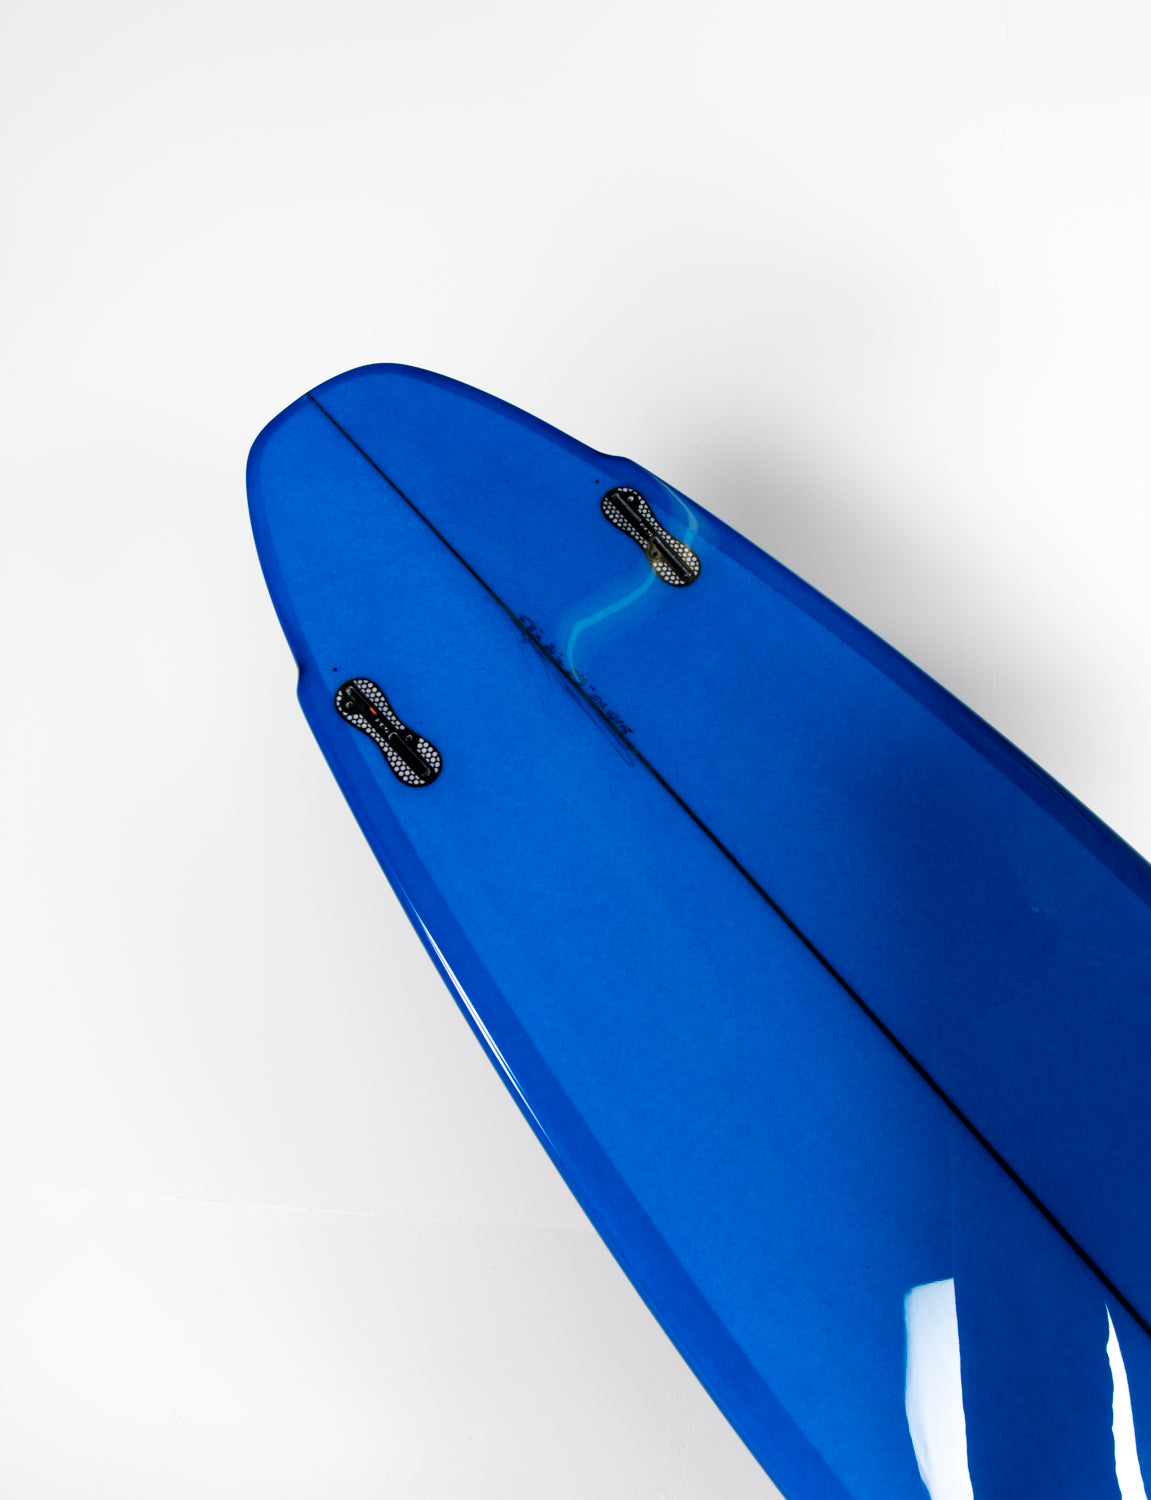 
                  
                    Pukas Surf Shop - Christenson Surfboards - LANE SPLITTER - 5'8" x 20 x 2 1/2 - CX02115
                  
                